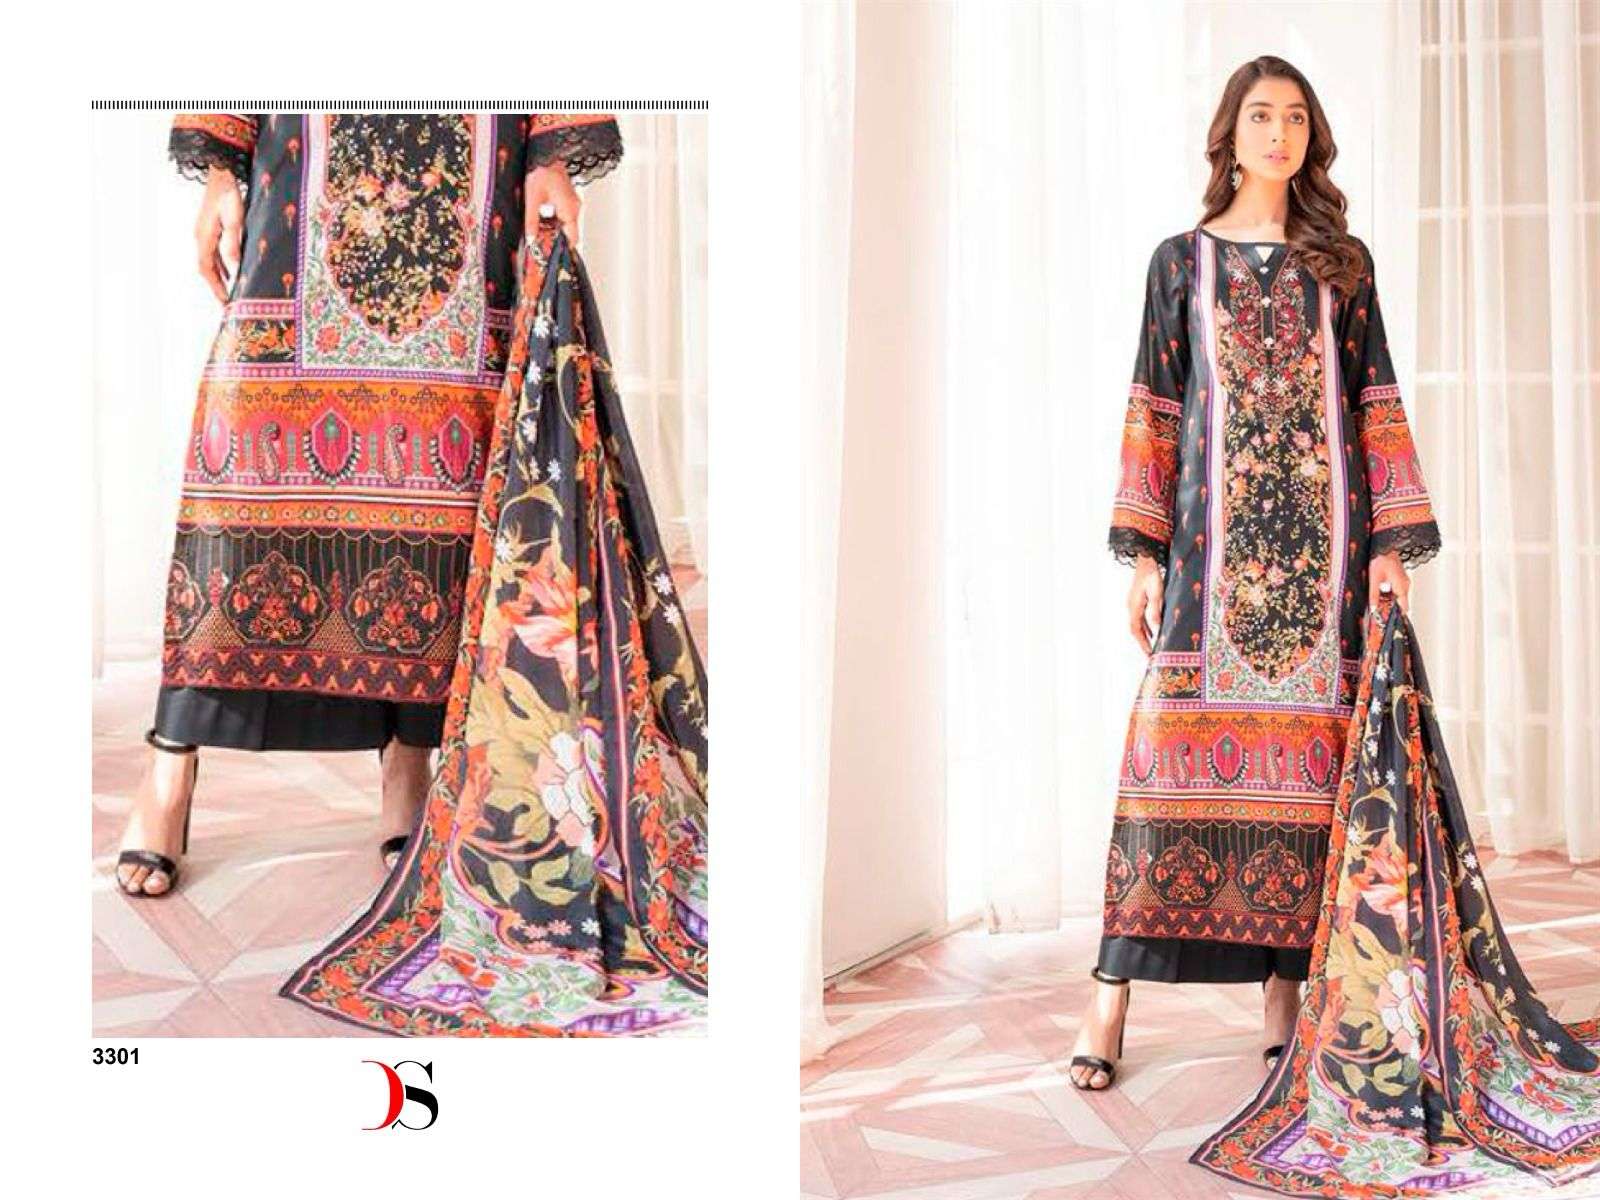 deepsy firdous morja vol-2 3301 to 3305 series cotton designer pakistani salwar suits with cotton dupatta collection at wholesale price